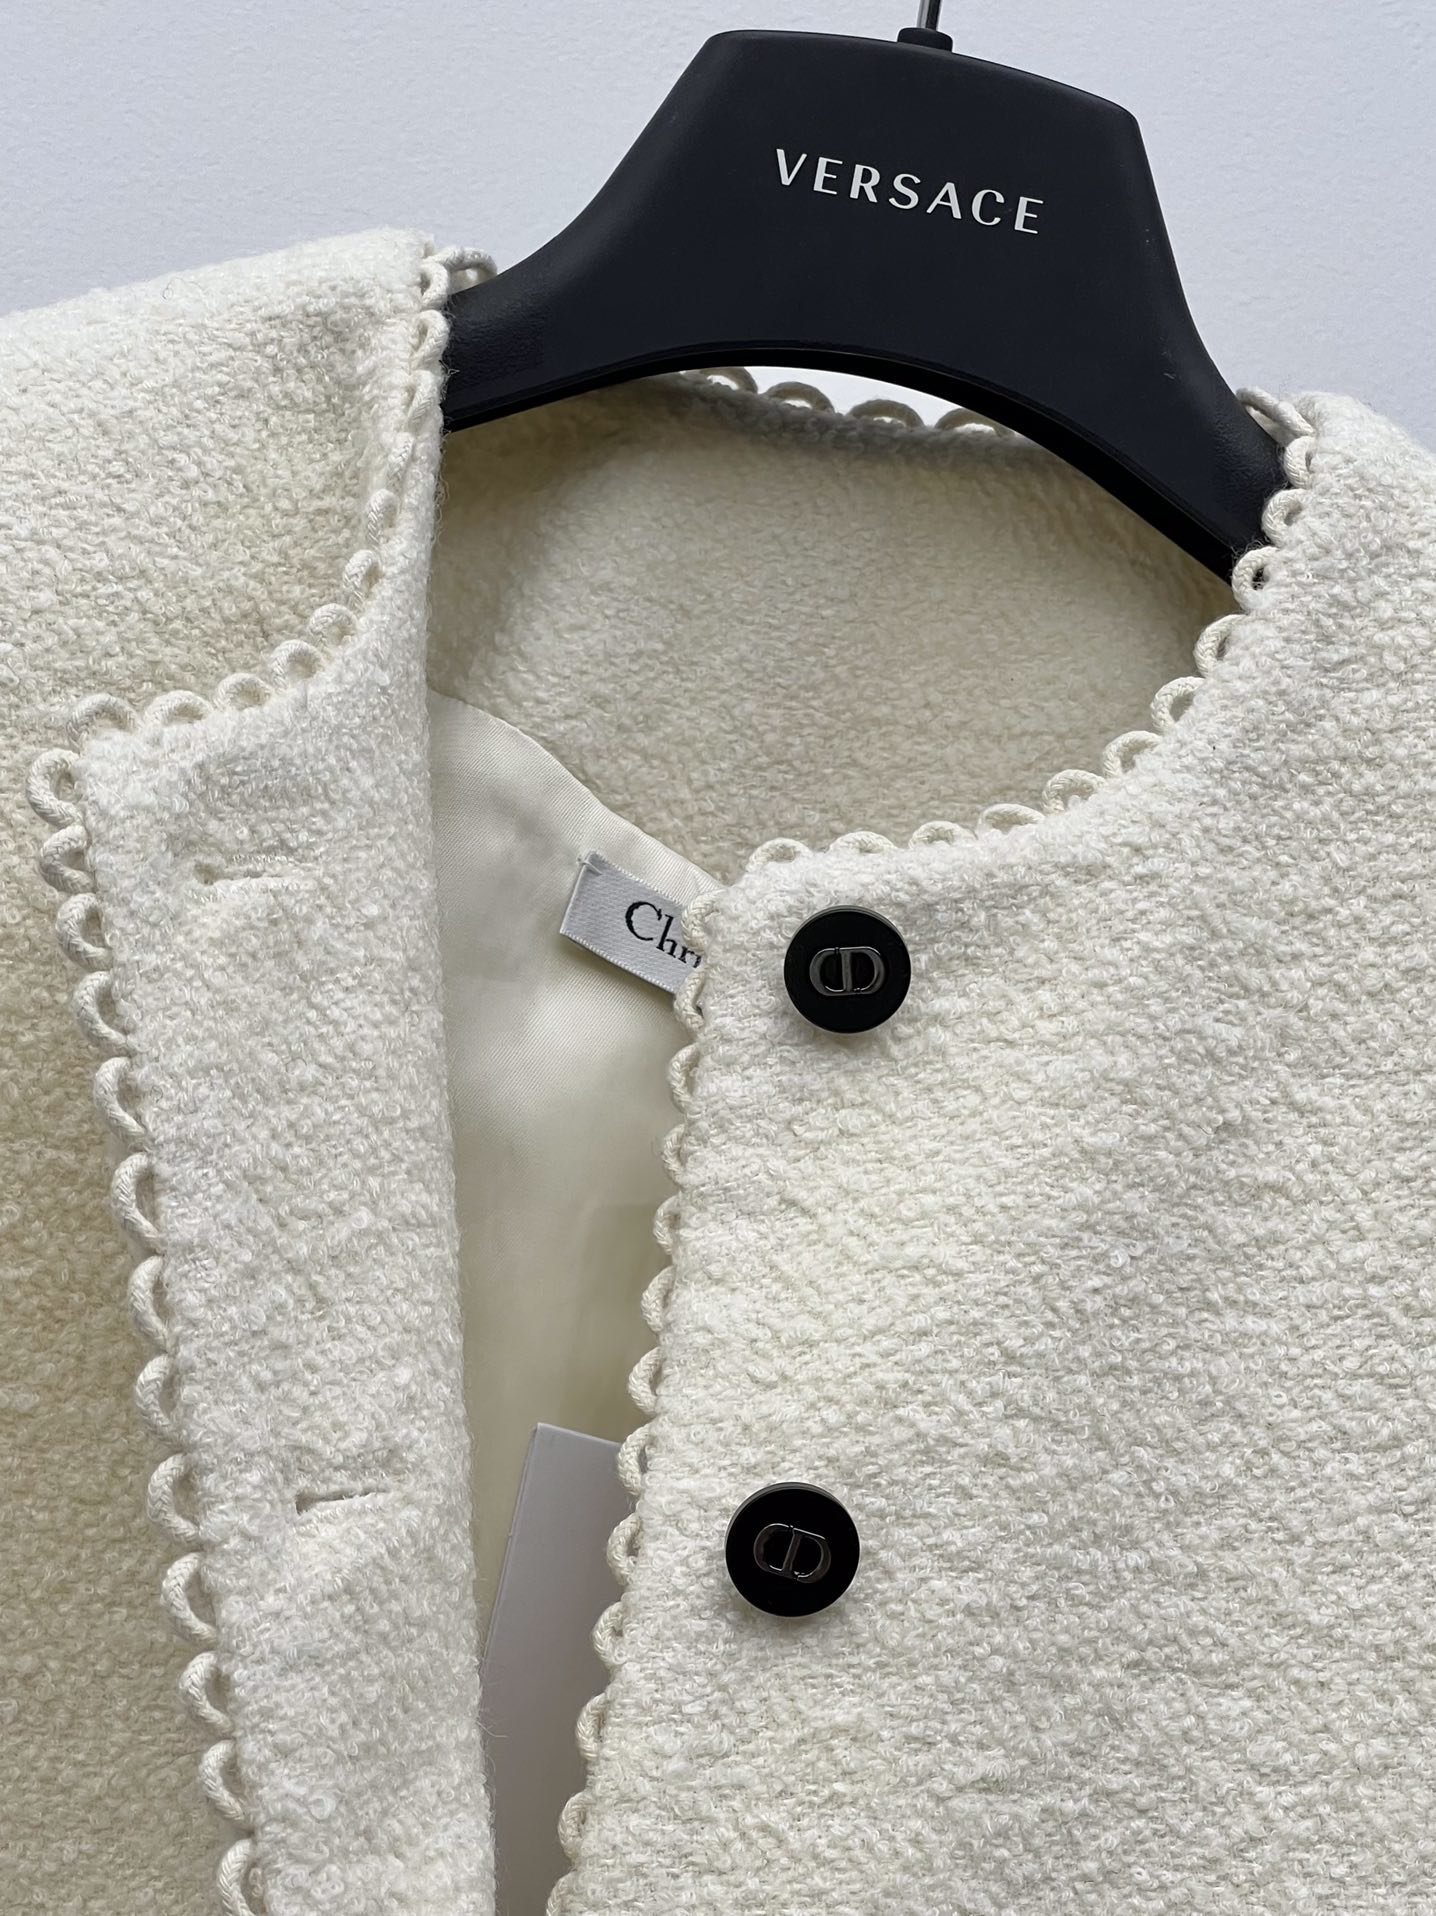 DIO*毛呢夹克外套24早春系列新品选用米白色初剪羊毛面料制作毛圈效果设计彰显dio的优雅气质直筒版型C